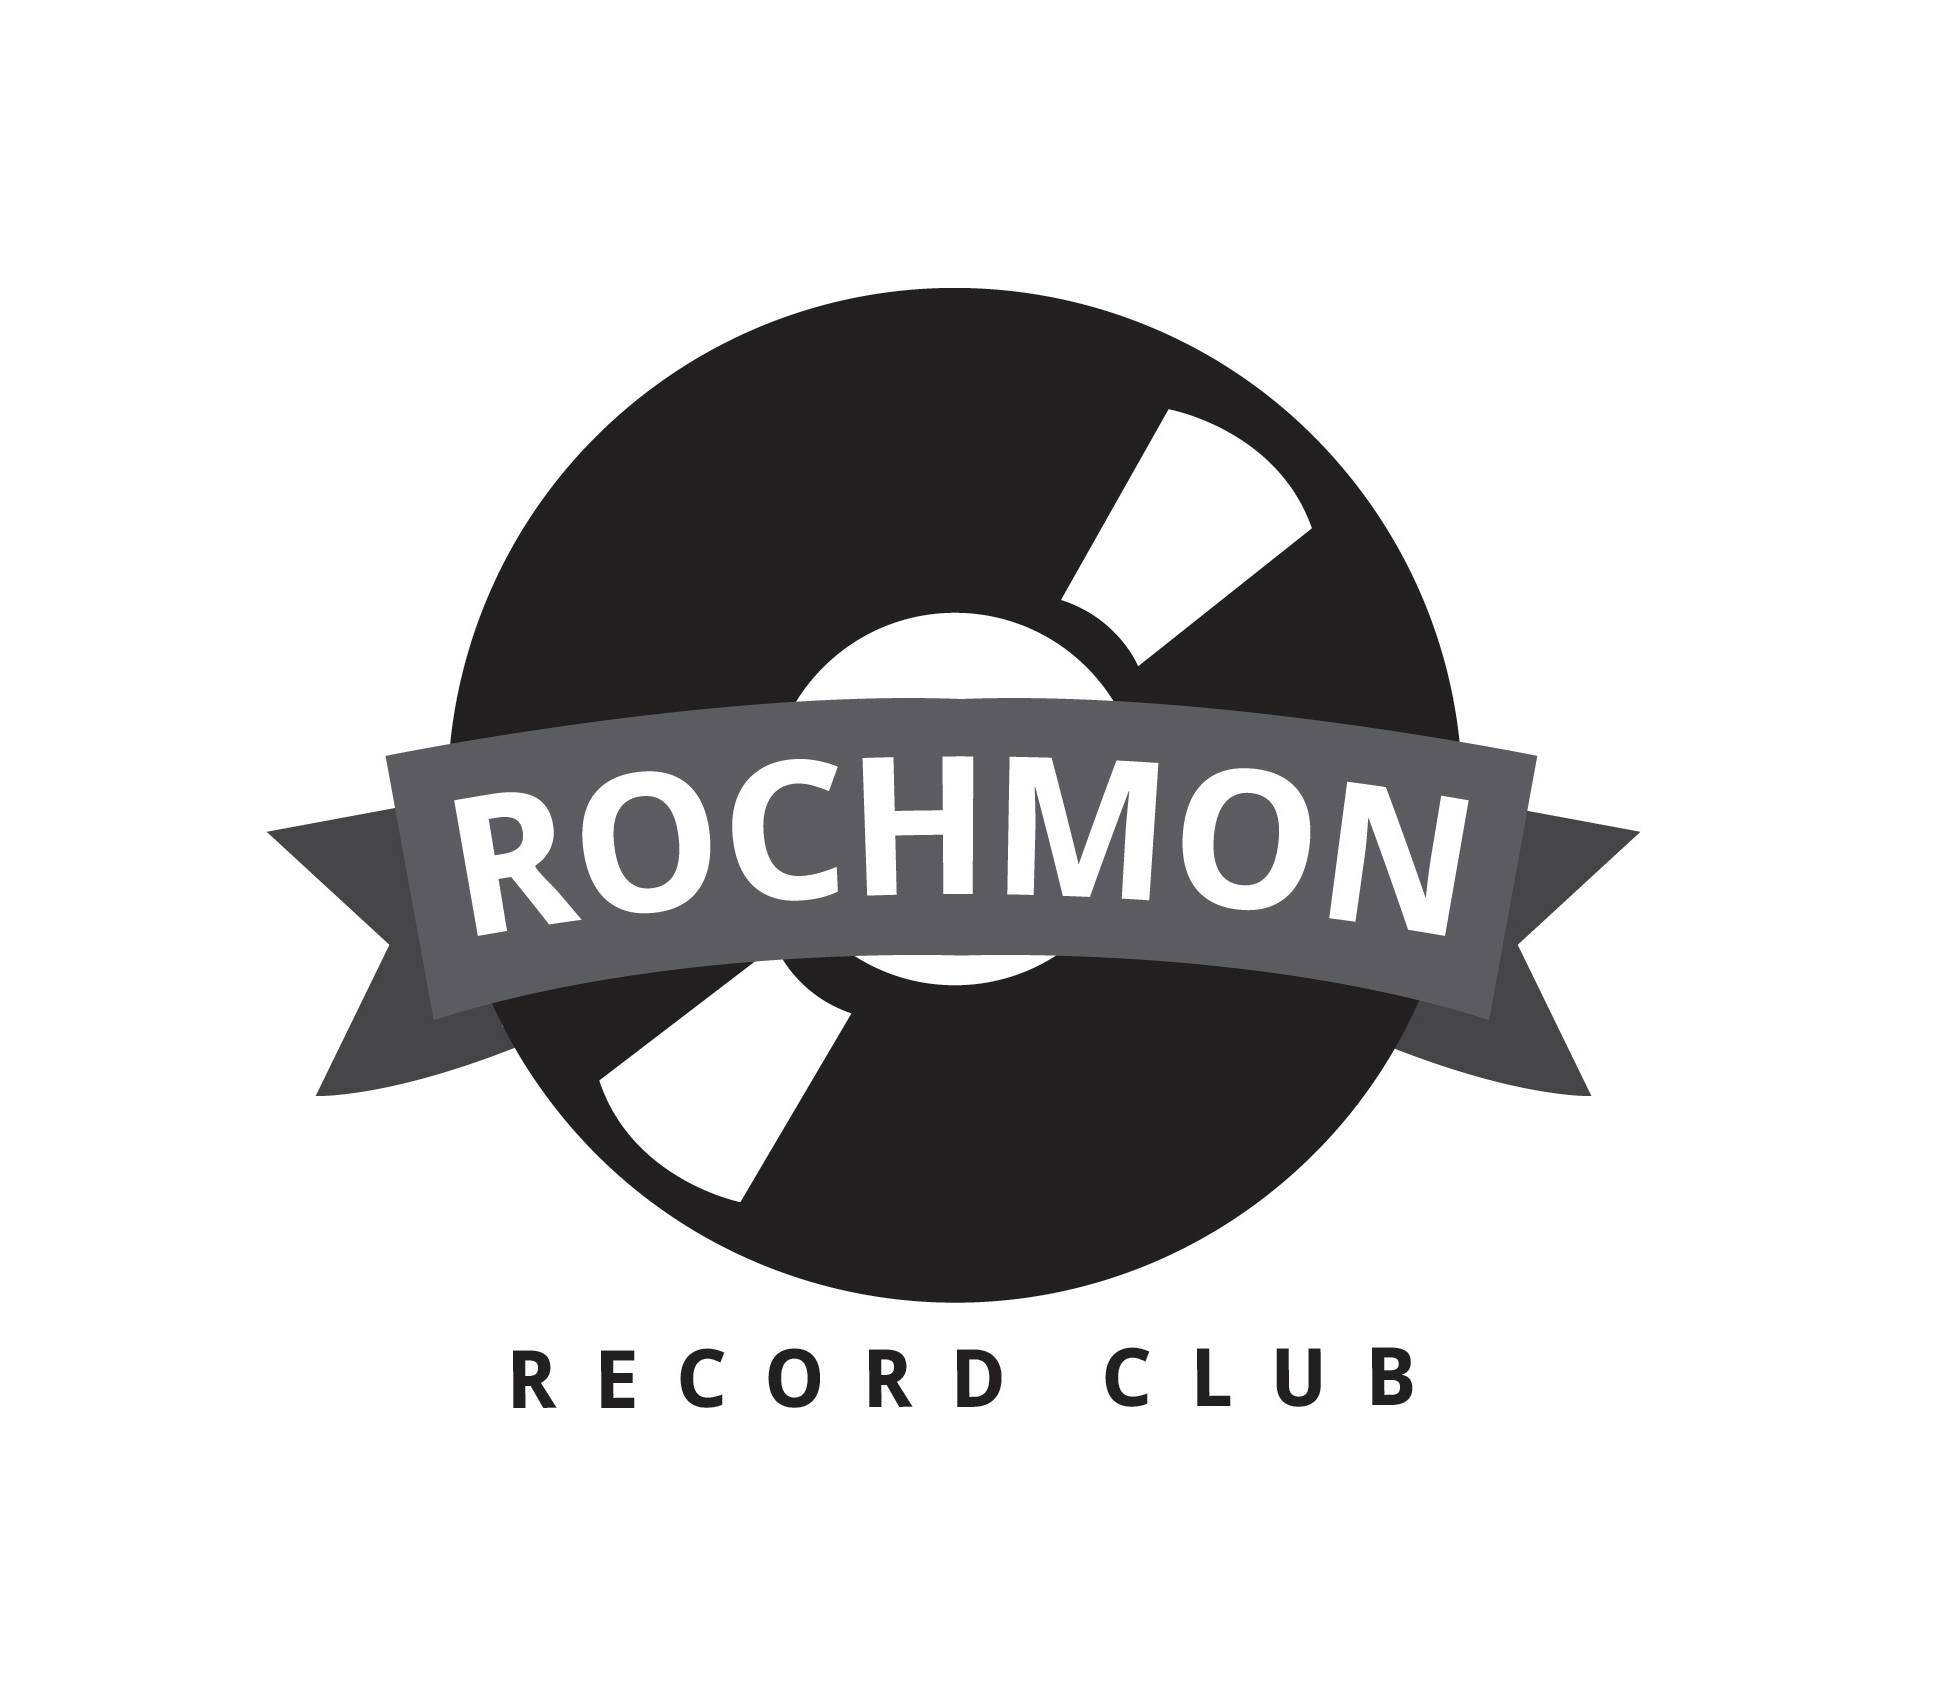 Rochmon Record Club Listening Party